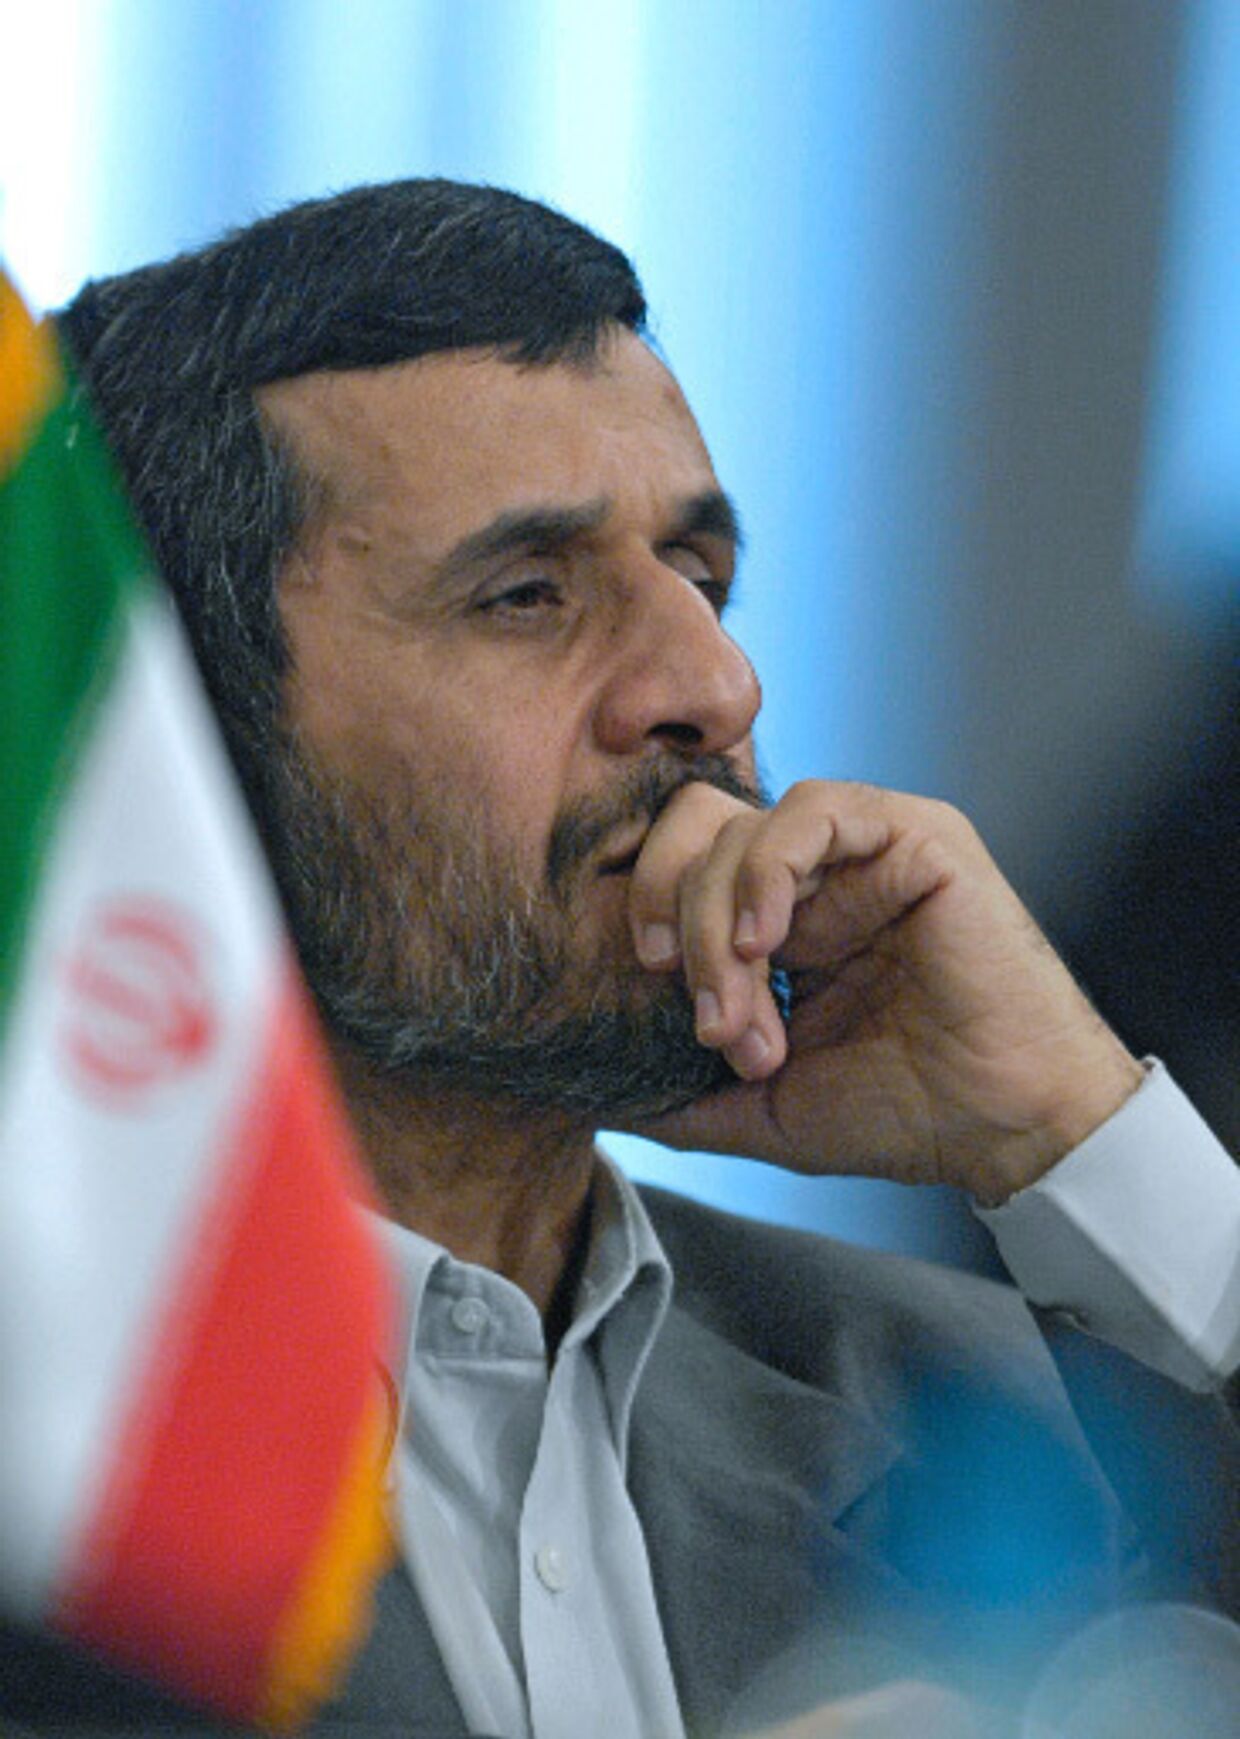 Президент Ирана Махмуд Ахмадинежад. Архив